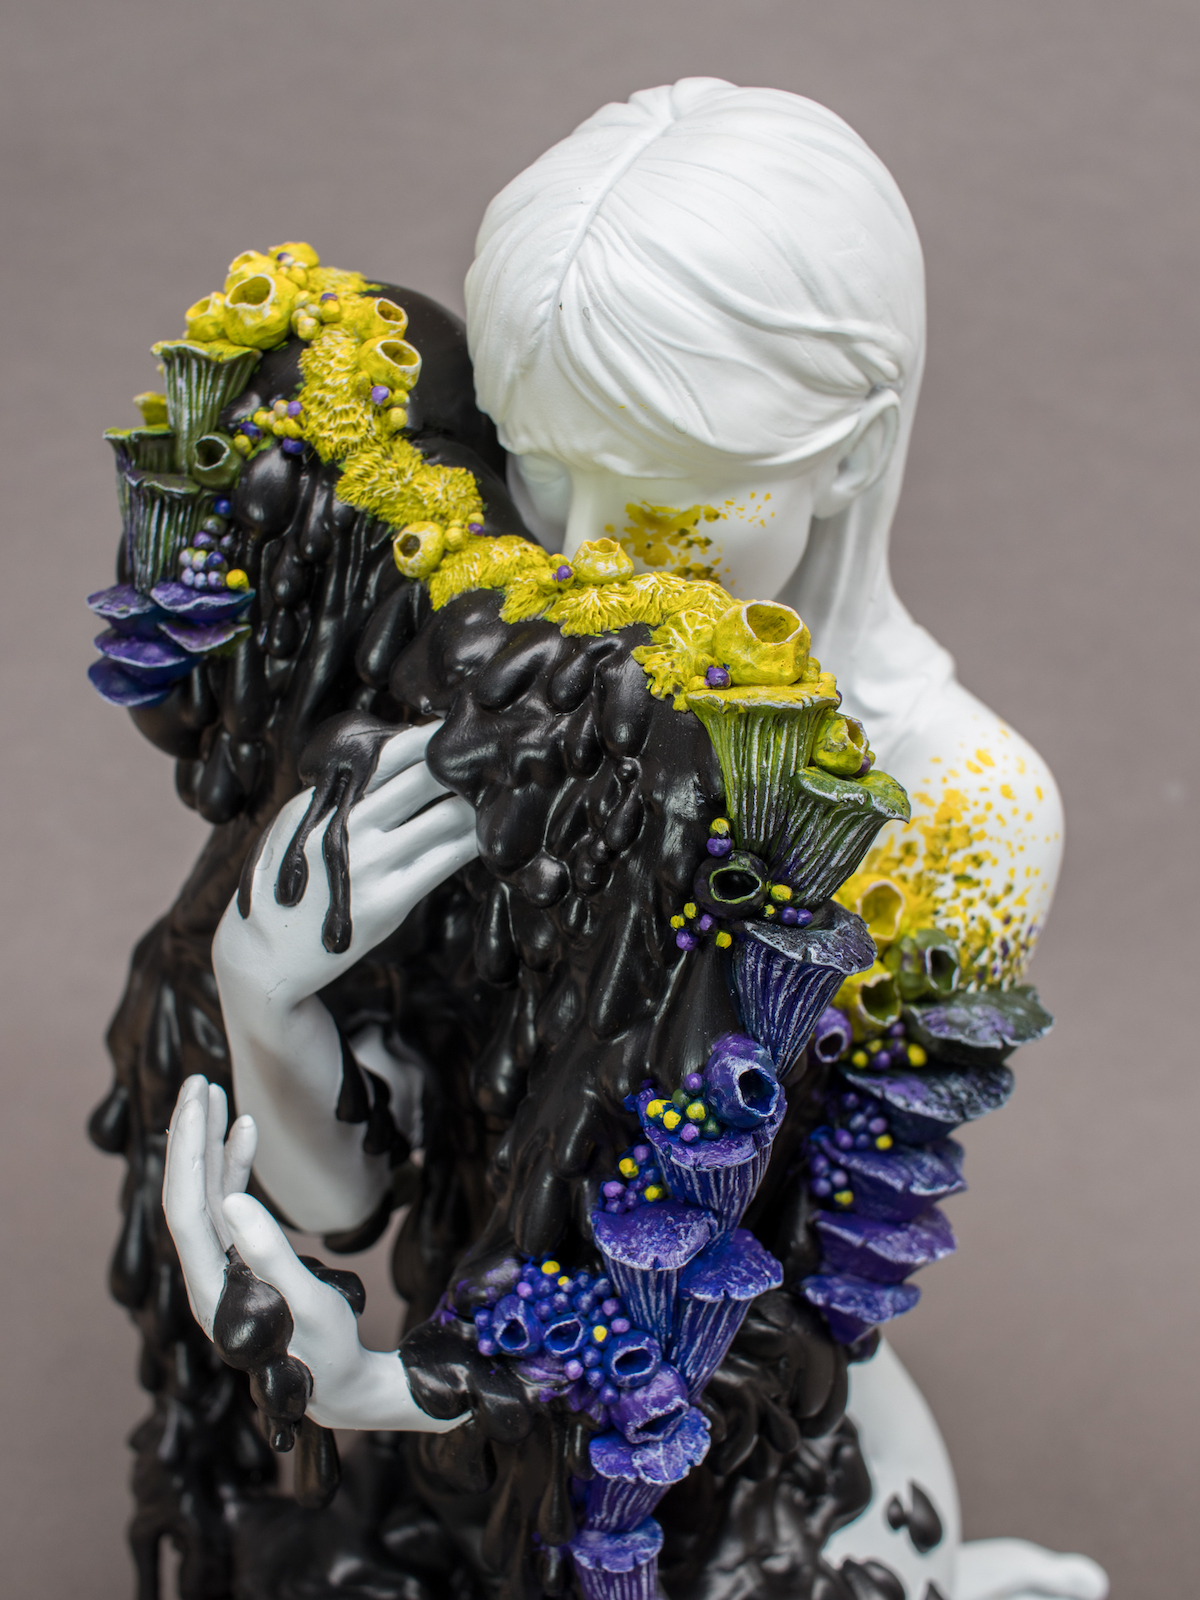 Surreal Sculptures by Miles Johnston and Stephanie Kilgast